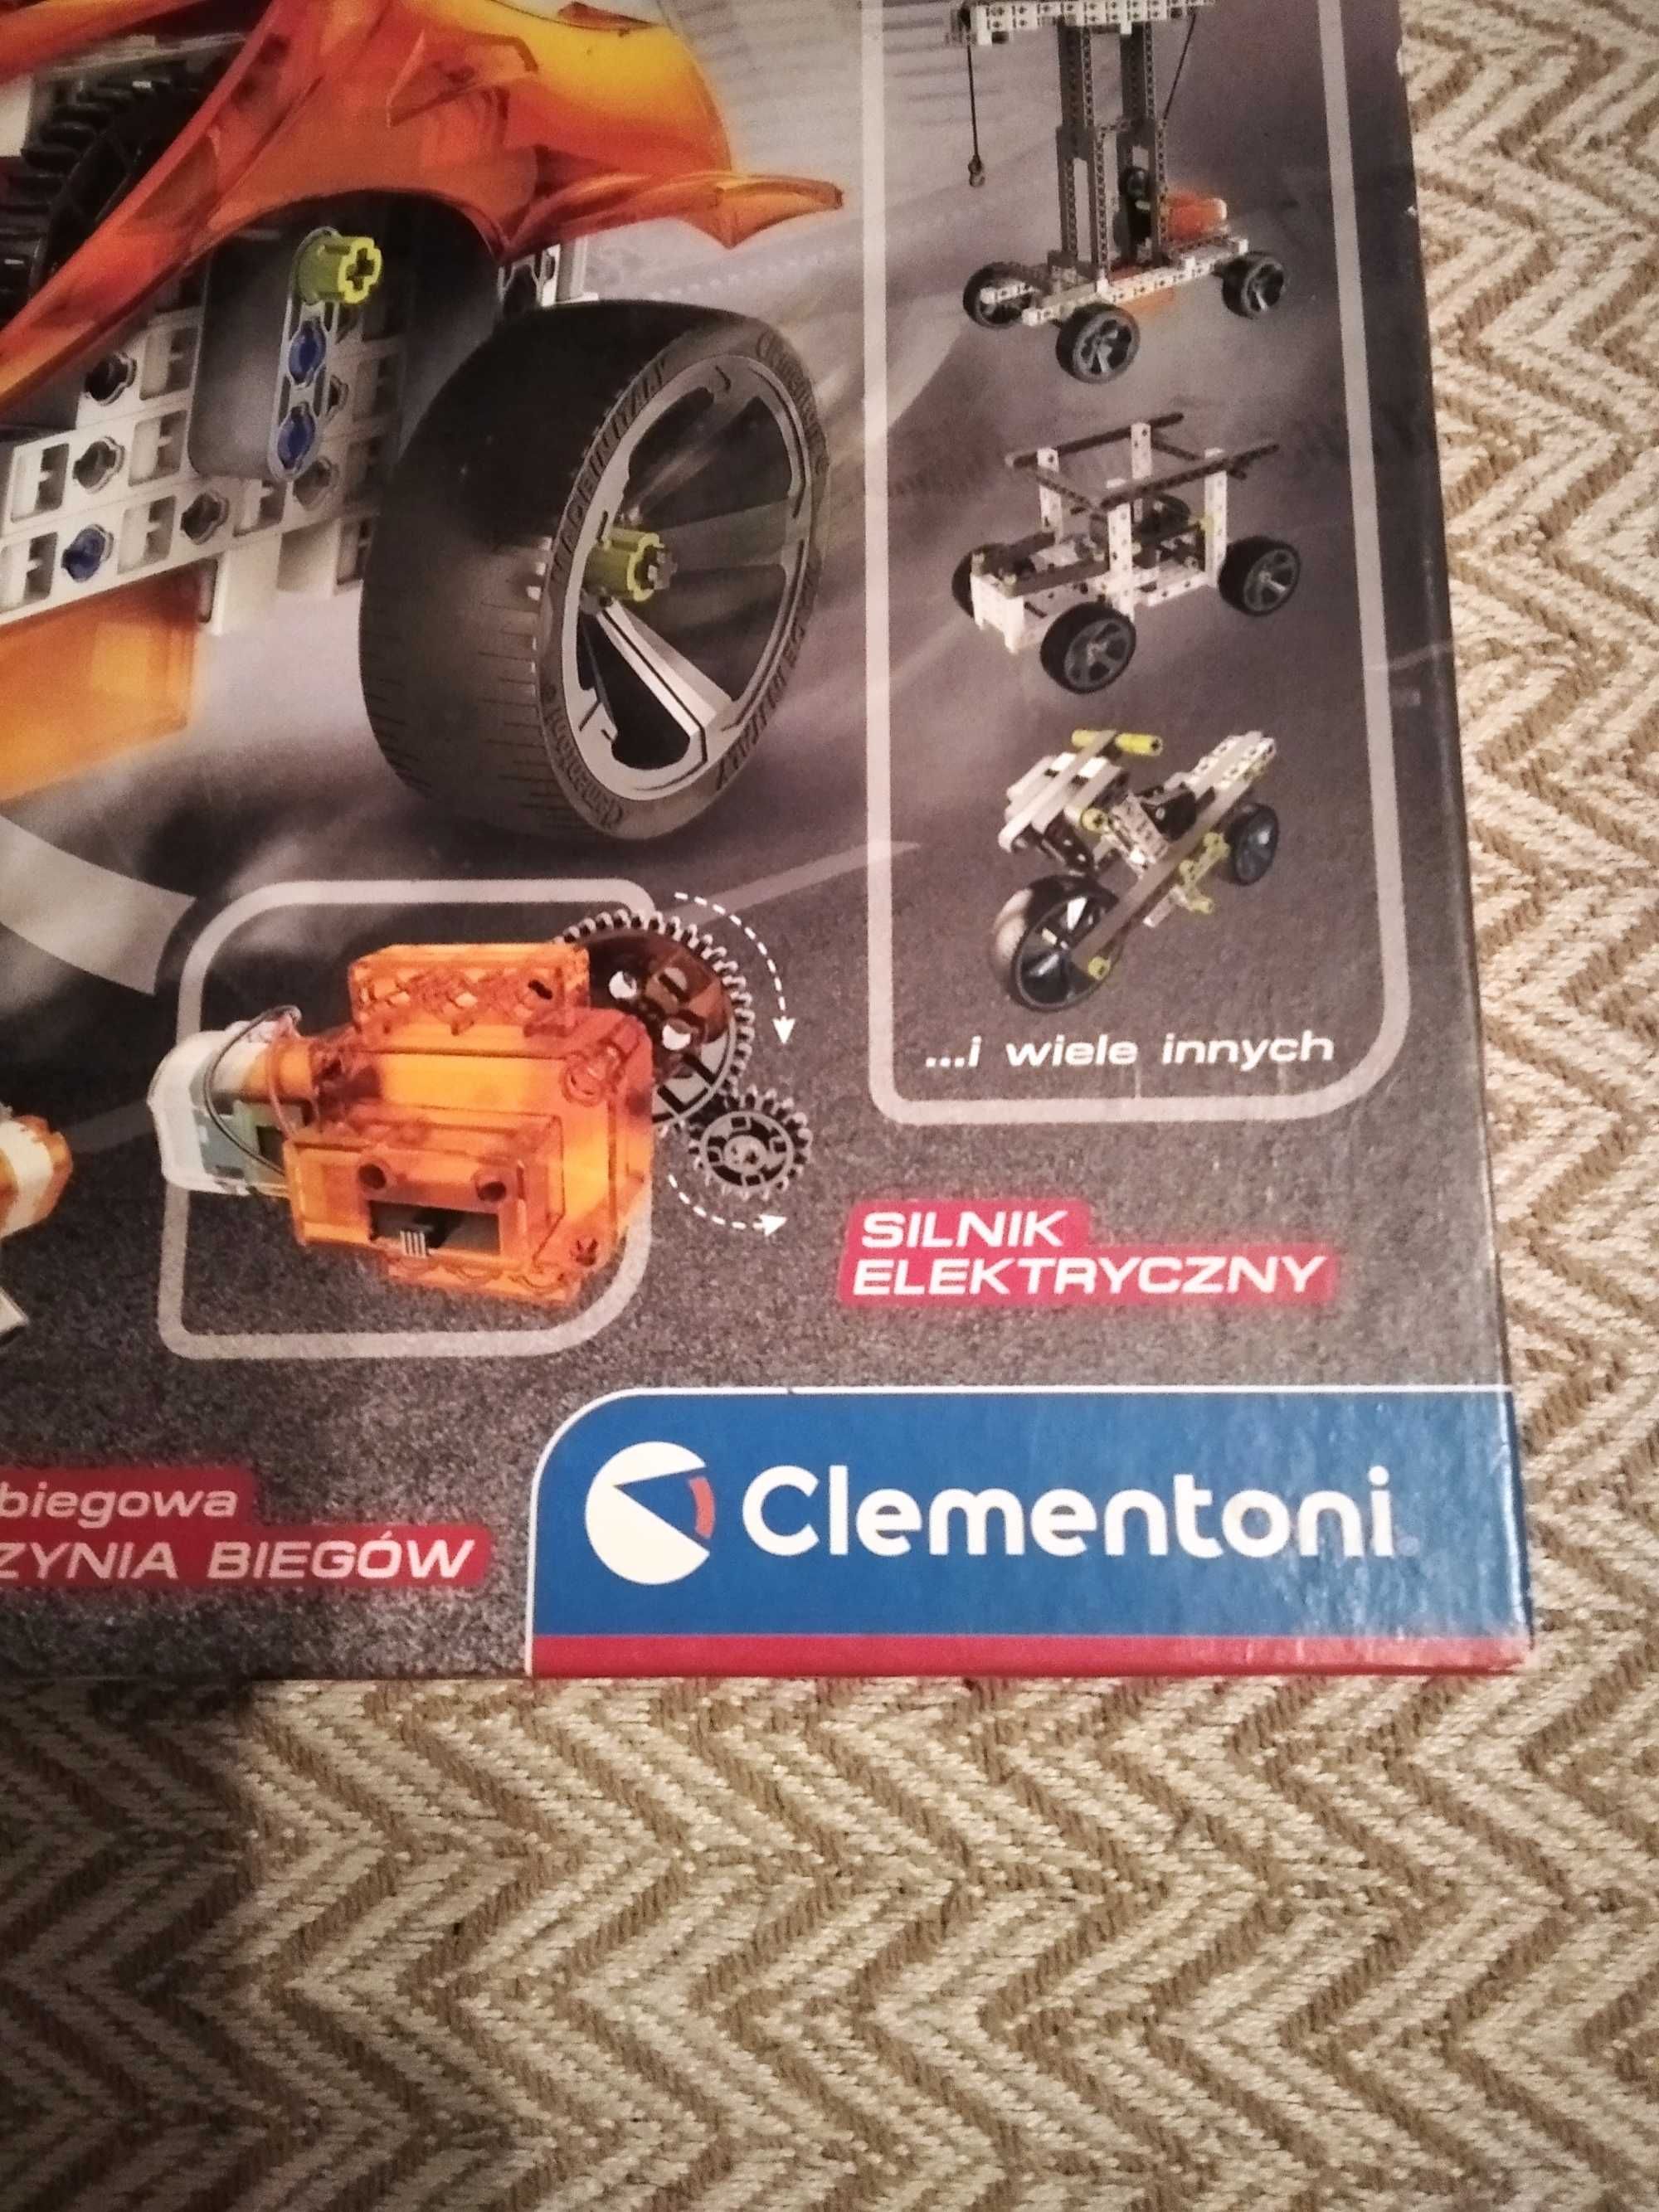 Mechanics Clementoni,klocki konstrukcyjne,silnik.